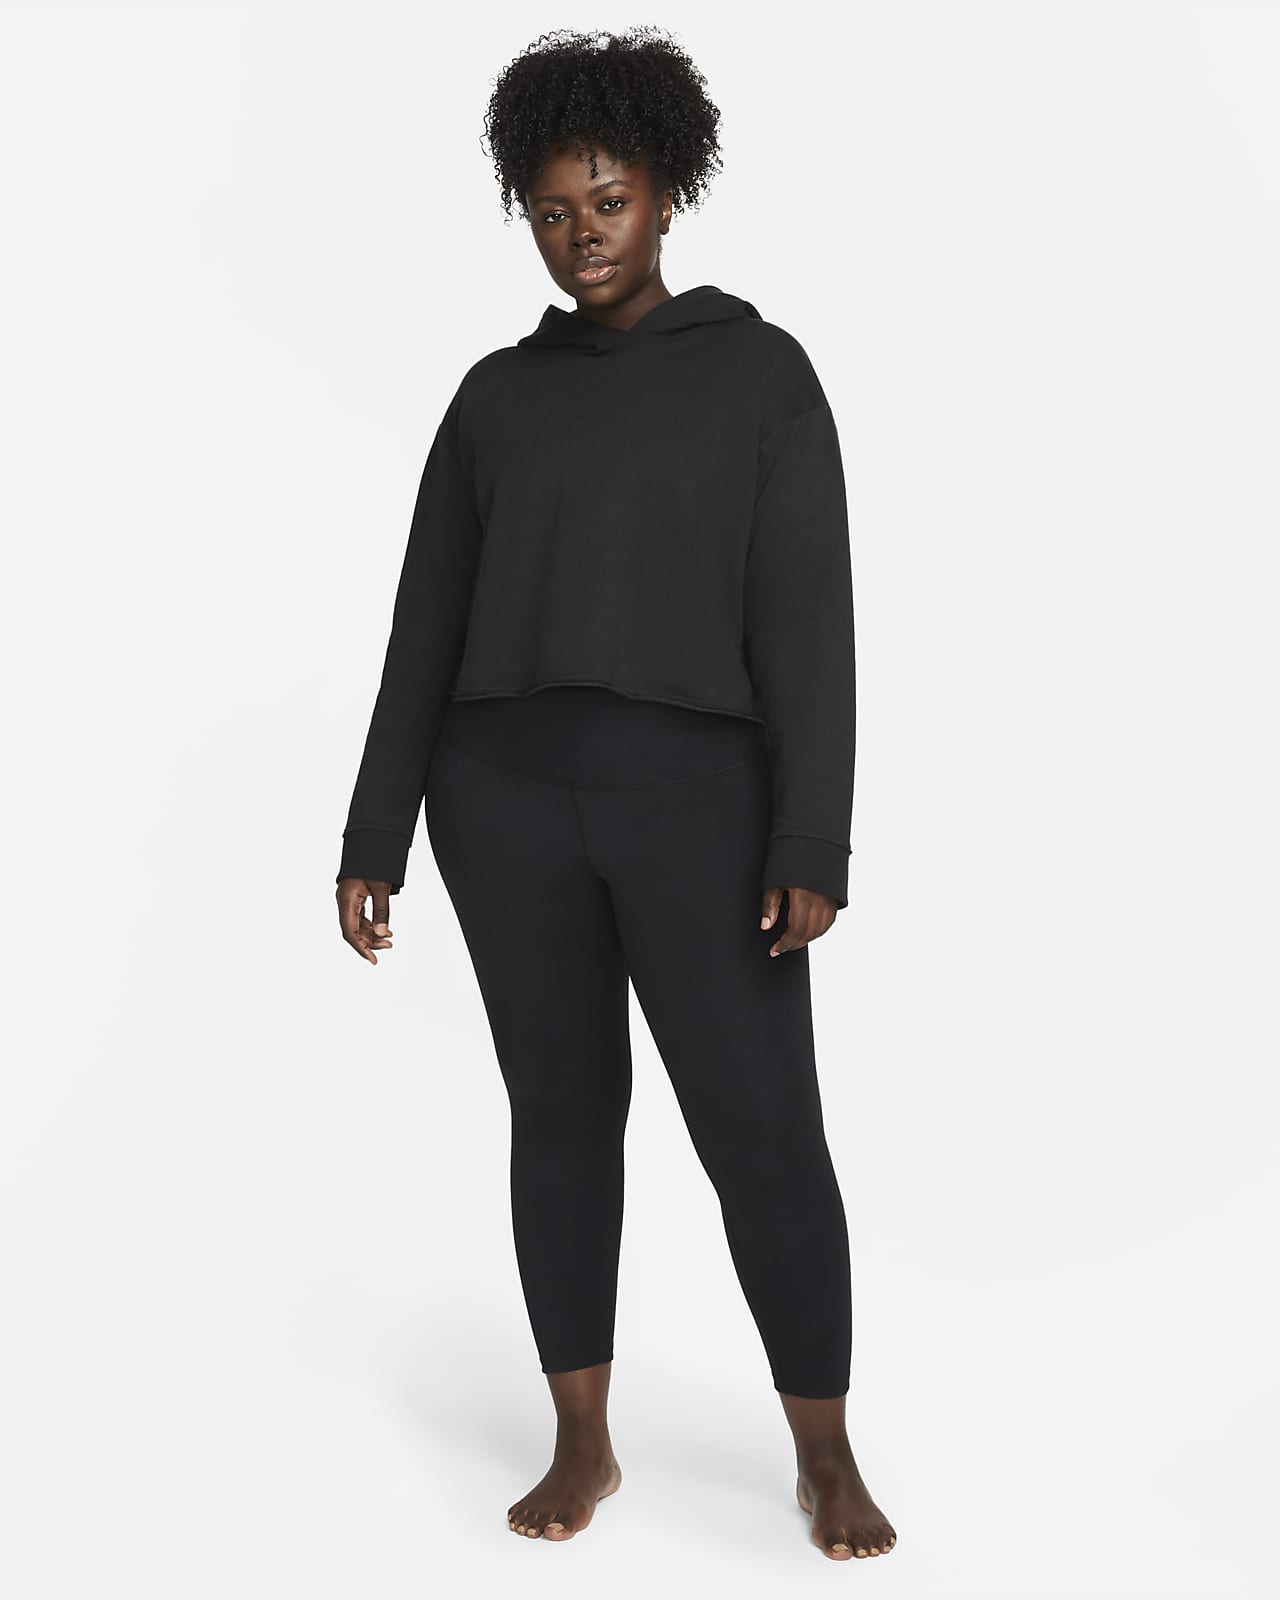 Nike Air Women's Plus Size High-Rise Tight Fit fitness Leggings Black RRP  $45